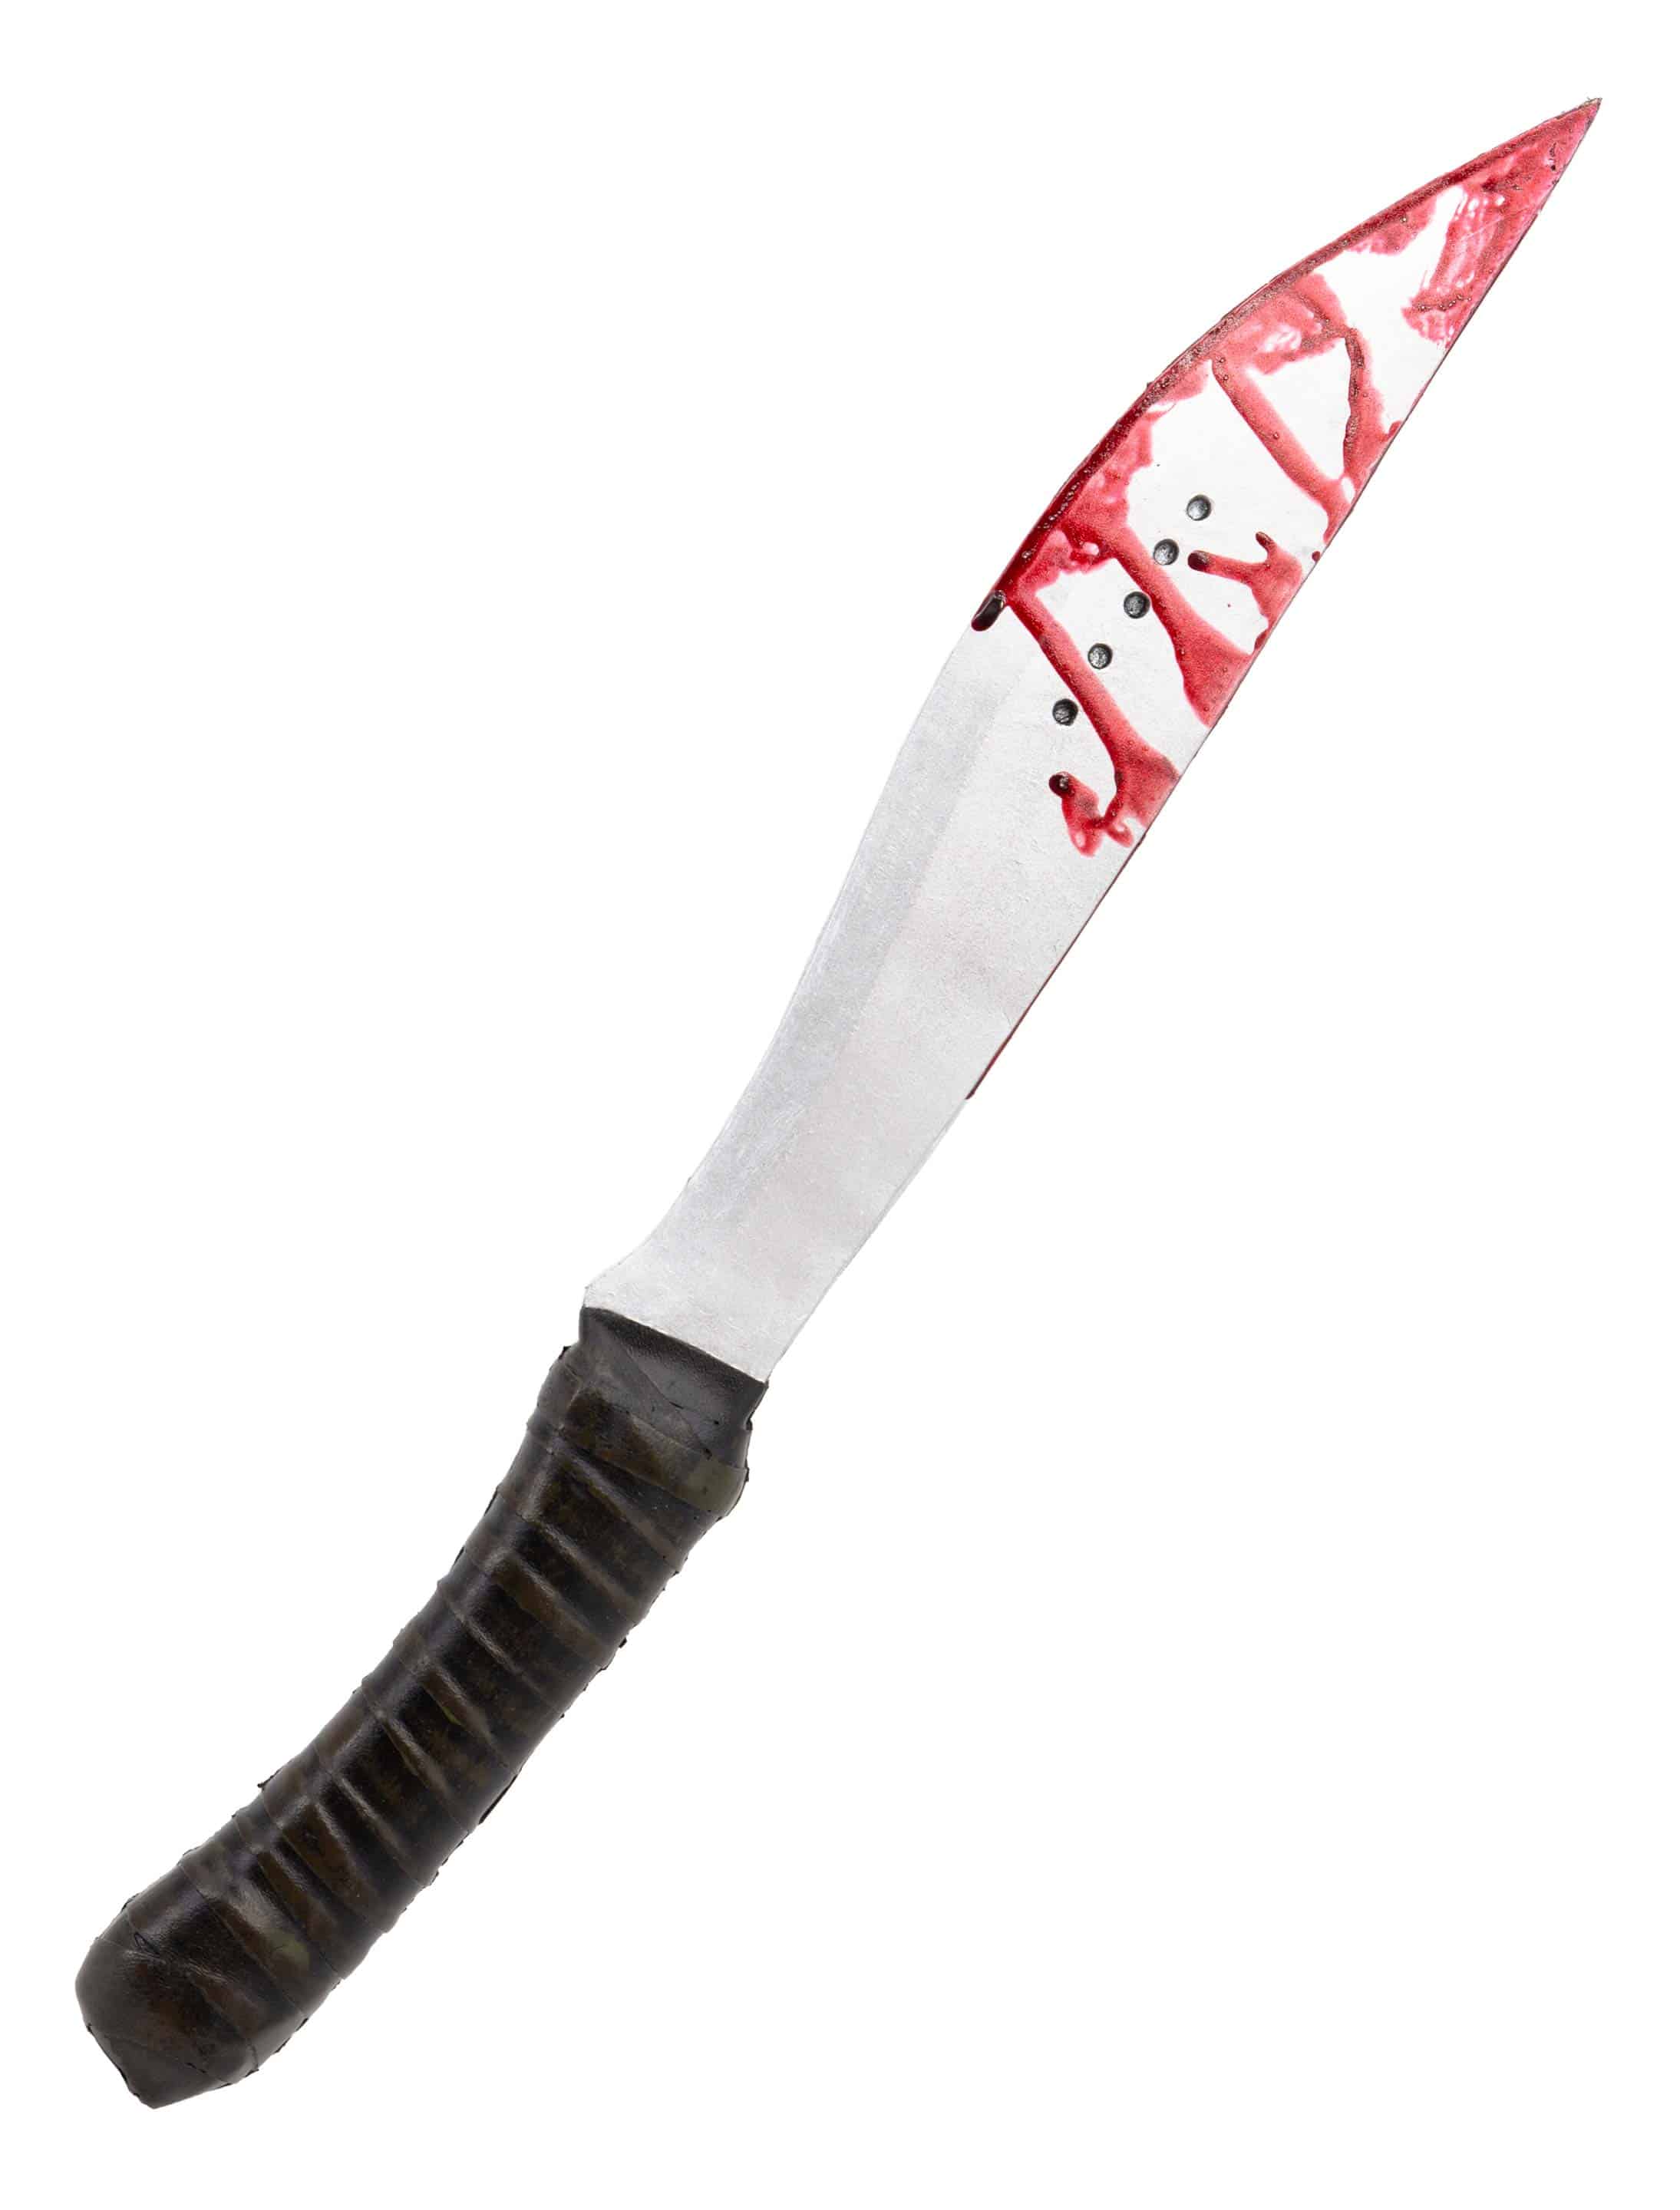 Messer blutig 40cm